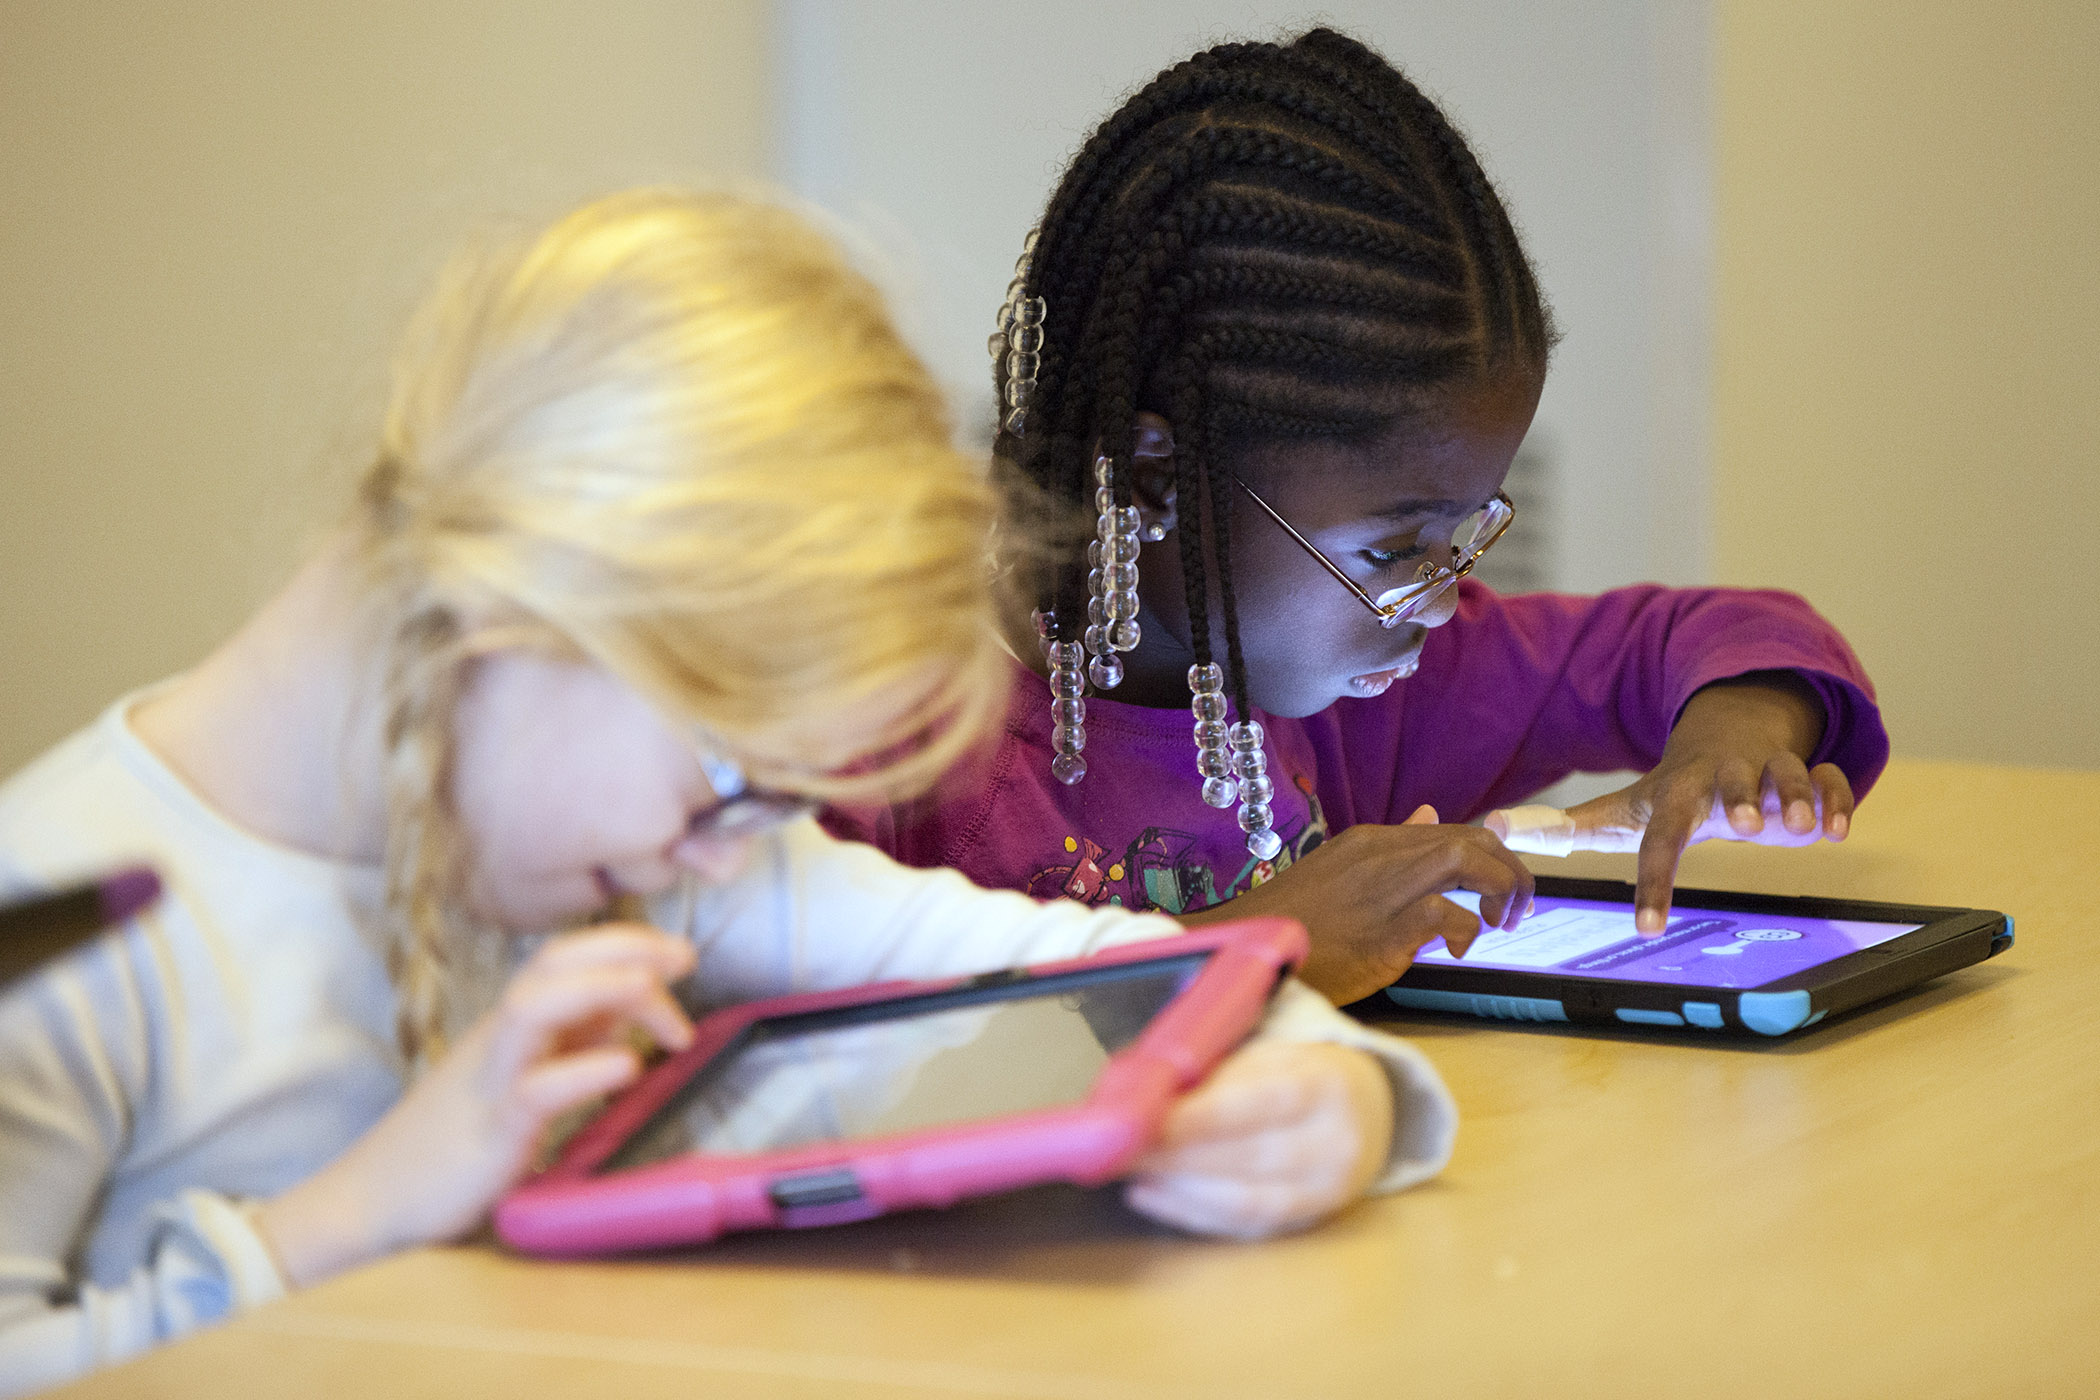 Two girls using iPads